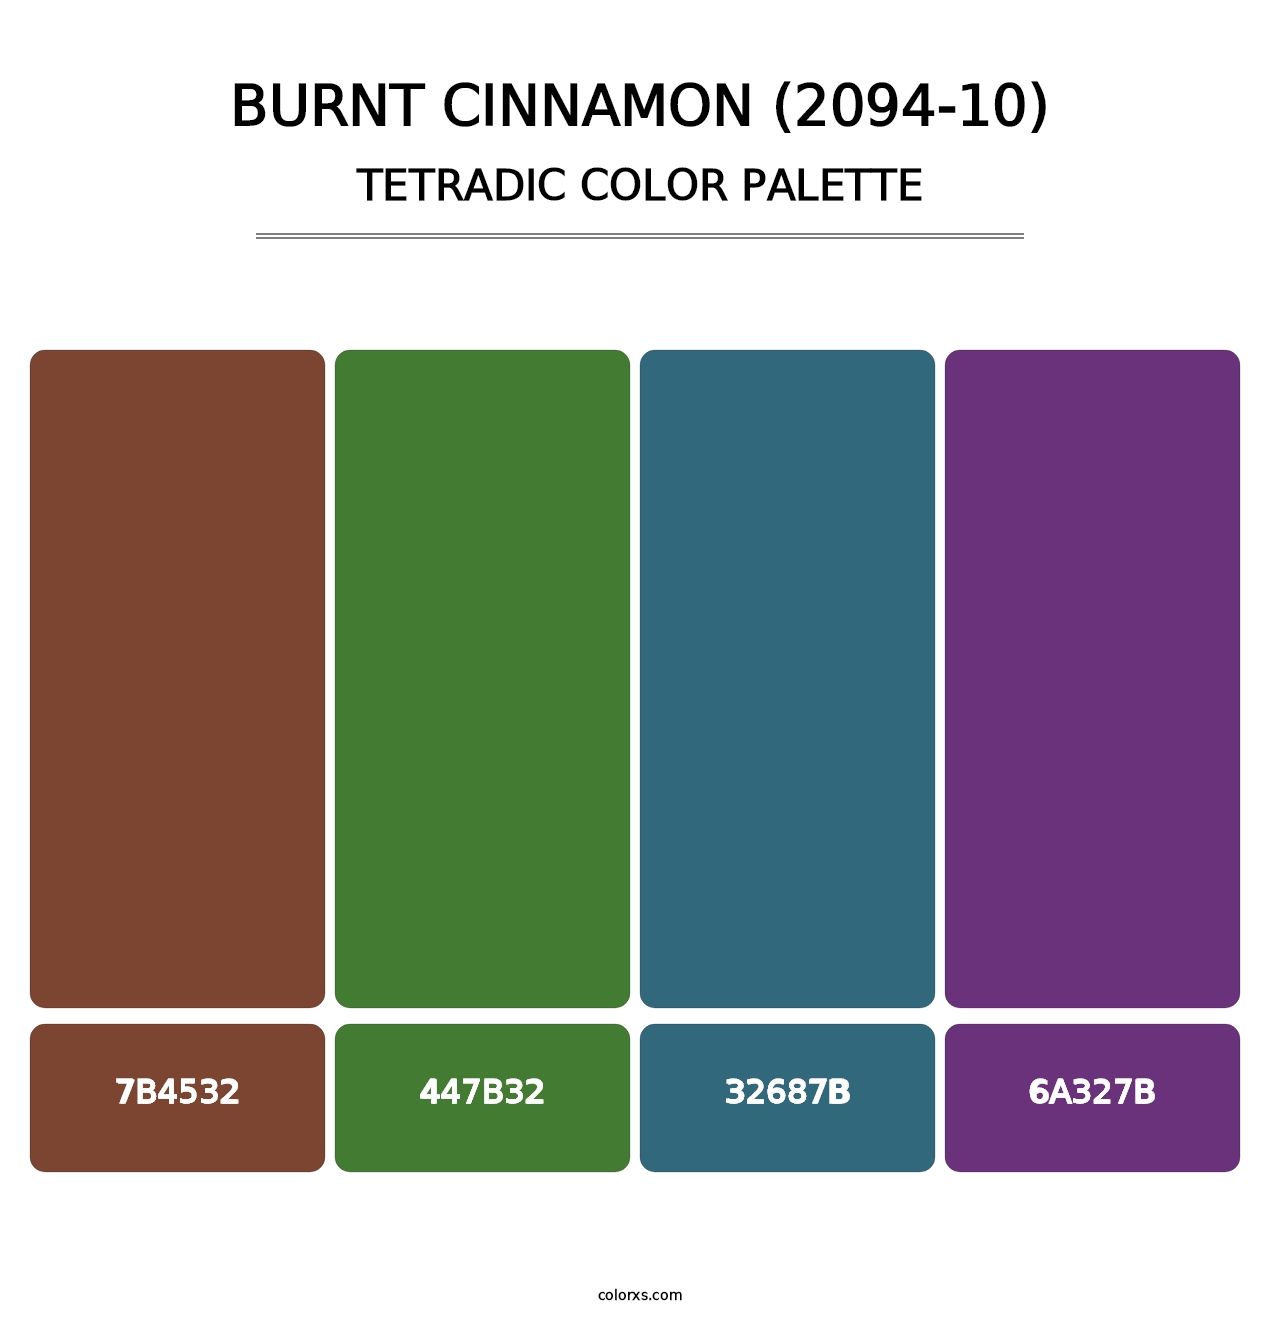 Burnt Cinnamon (2094-10) - Tetradic Color Palette